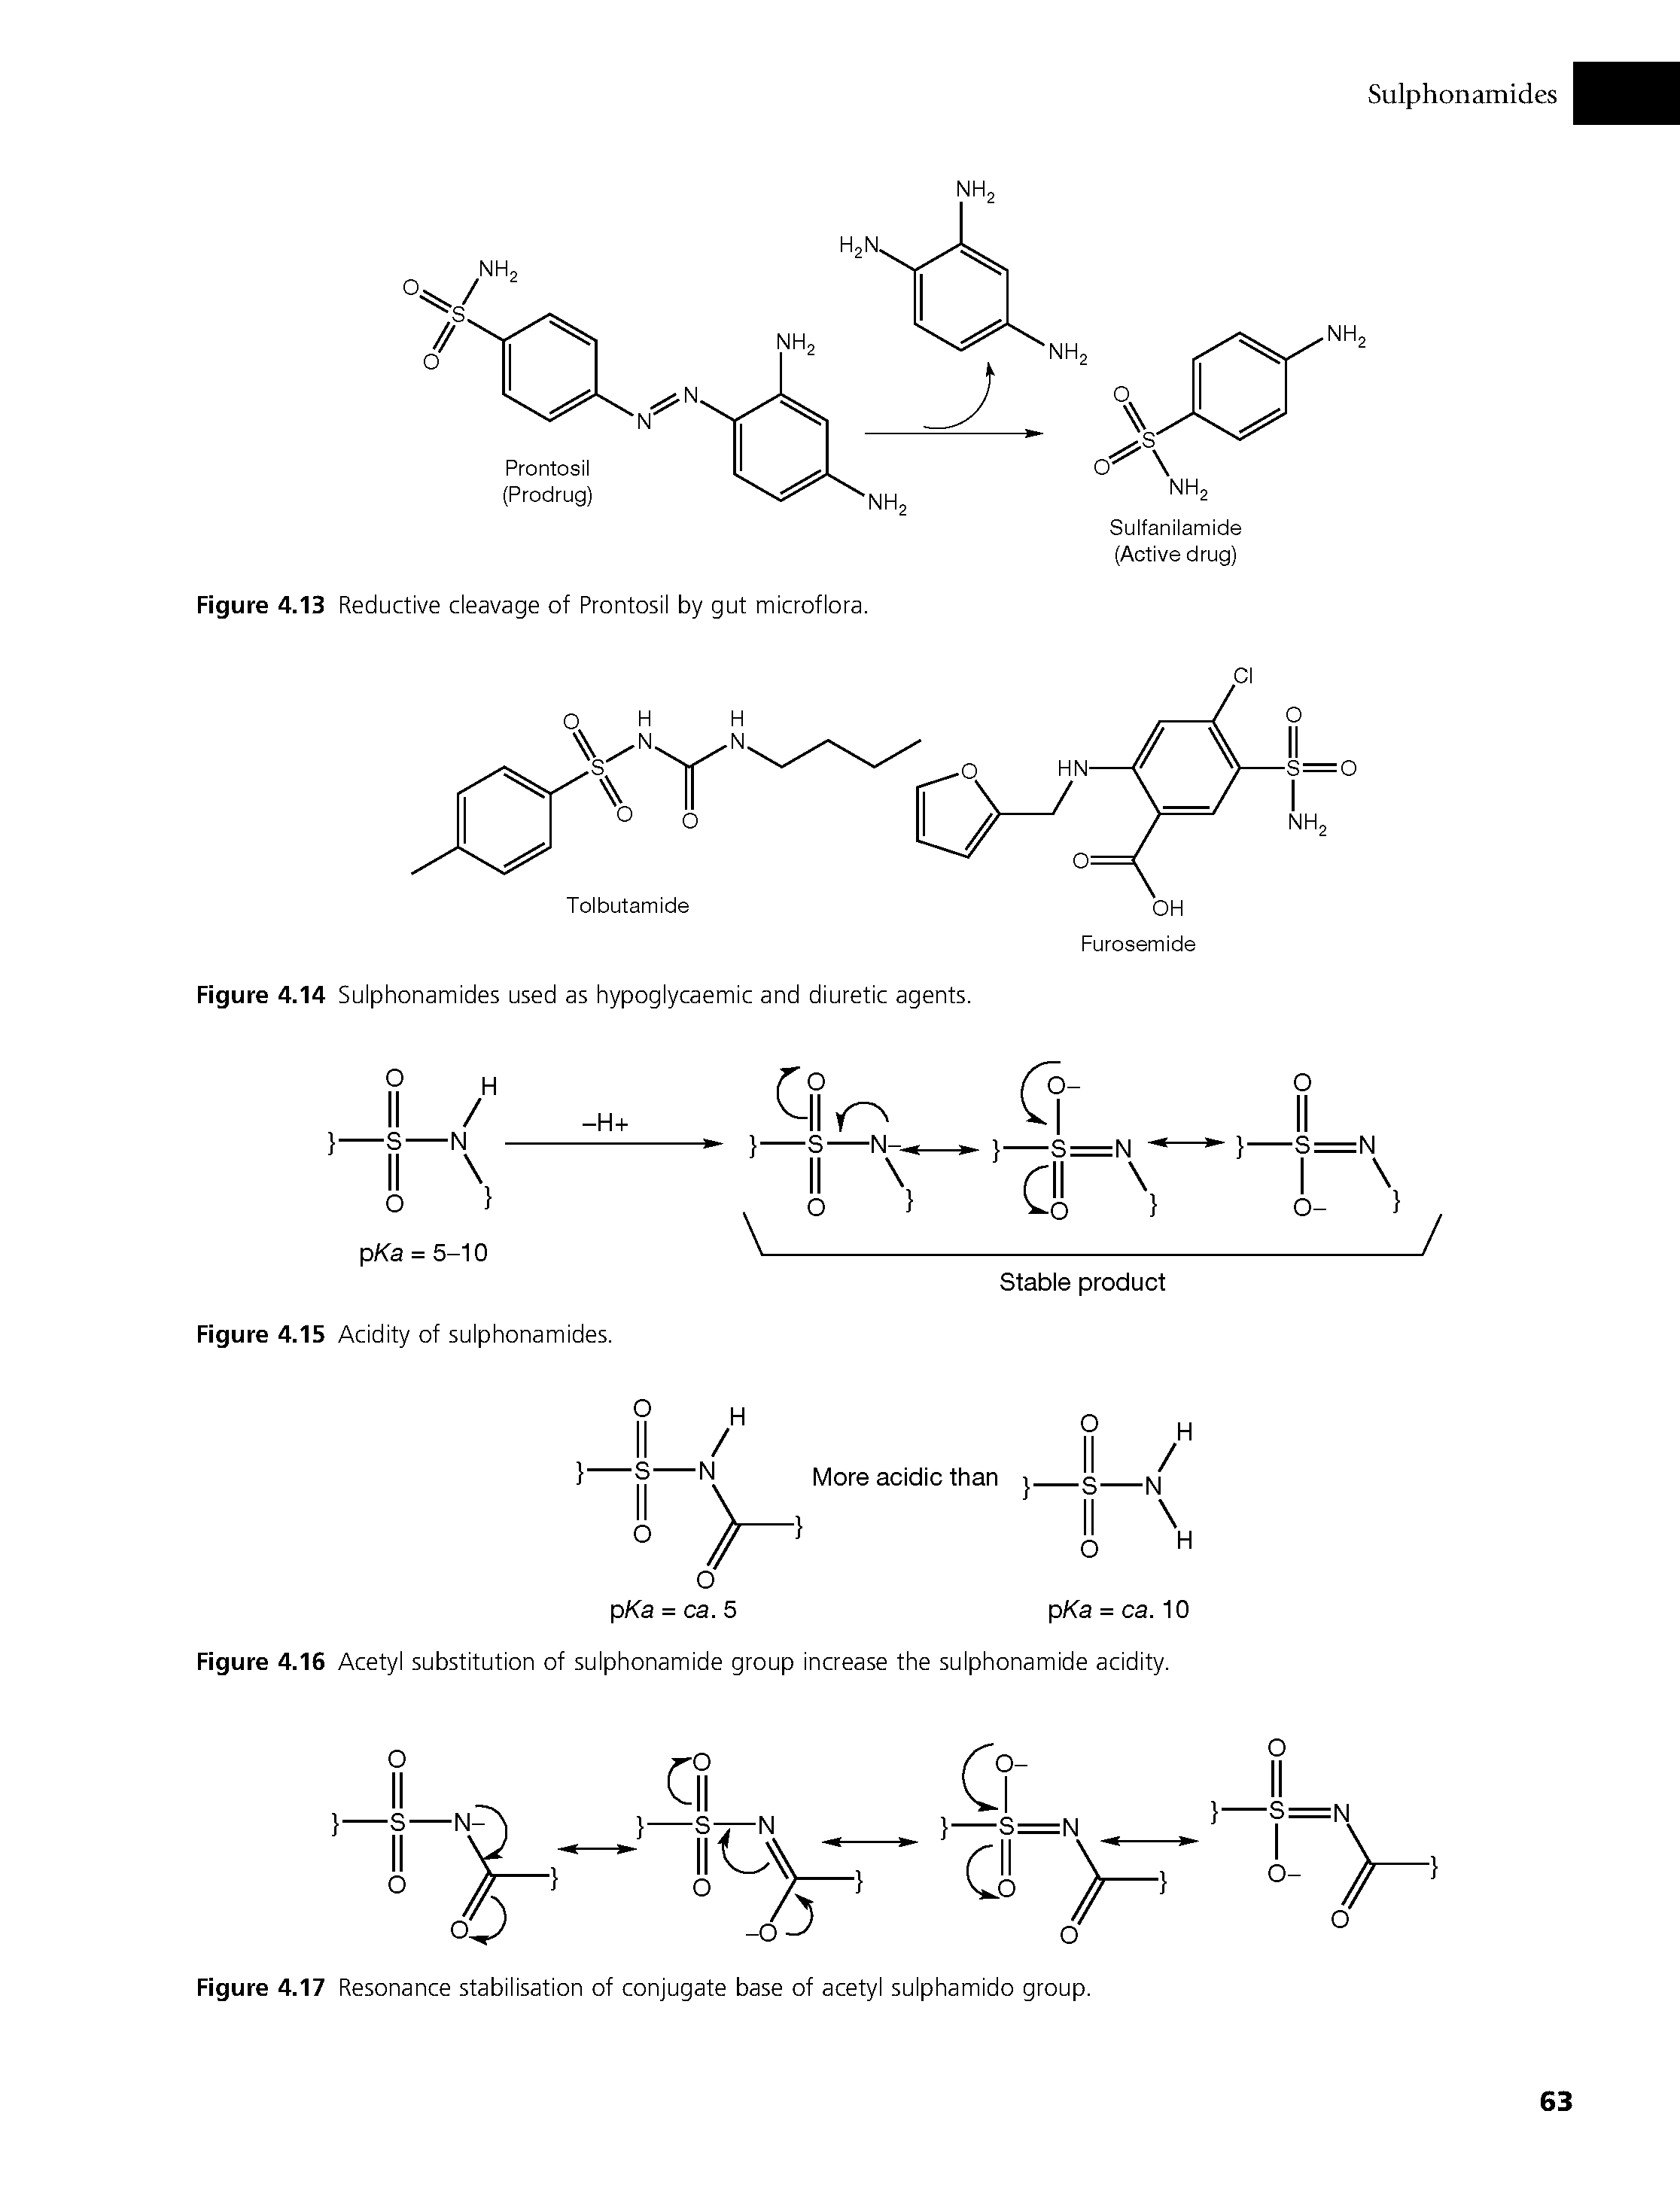 Figure 4.14 Sulphonamides used as hypoglycaemic and diuretic agents.